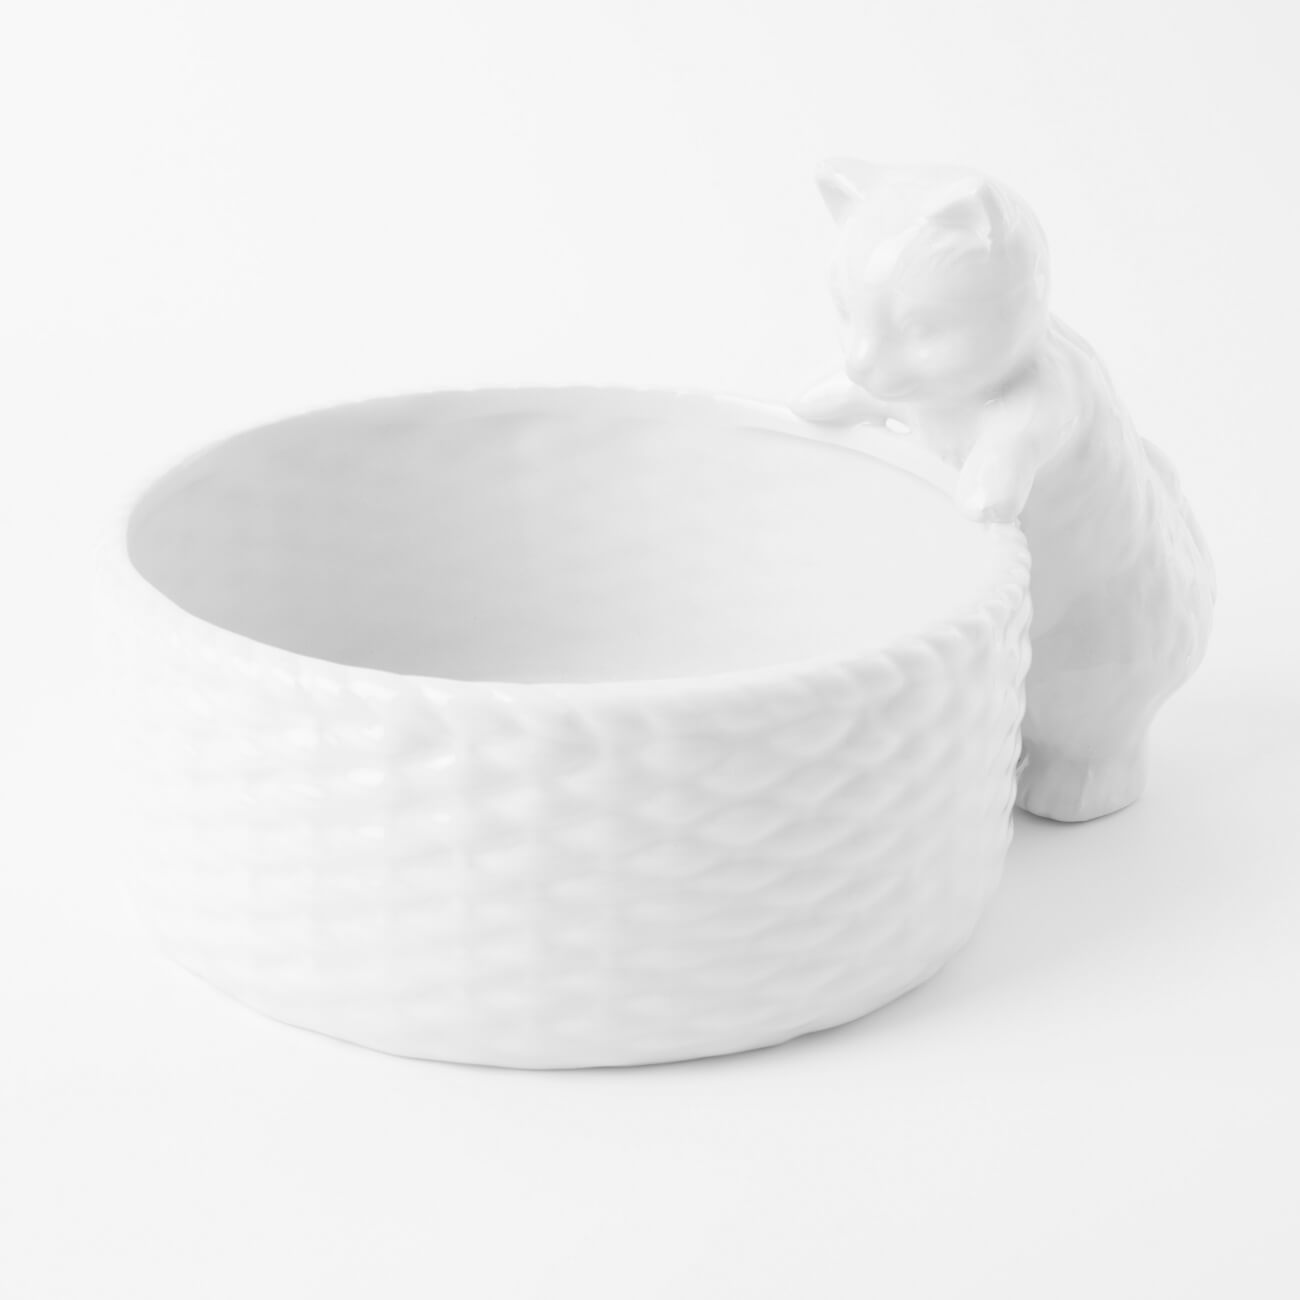 Конфетница, 23х13 см, керамика, белая, Кот с корзиной, Kitten